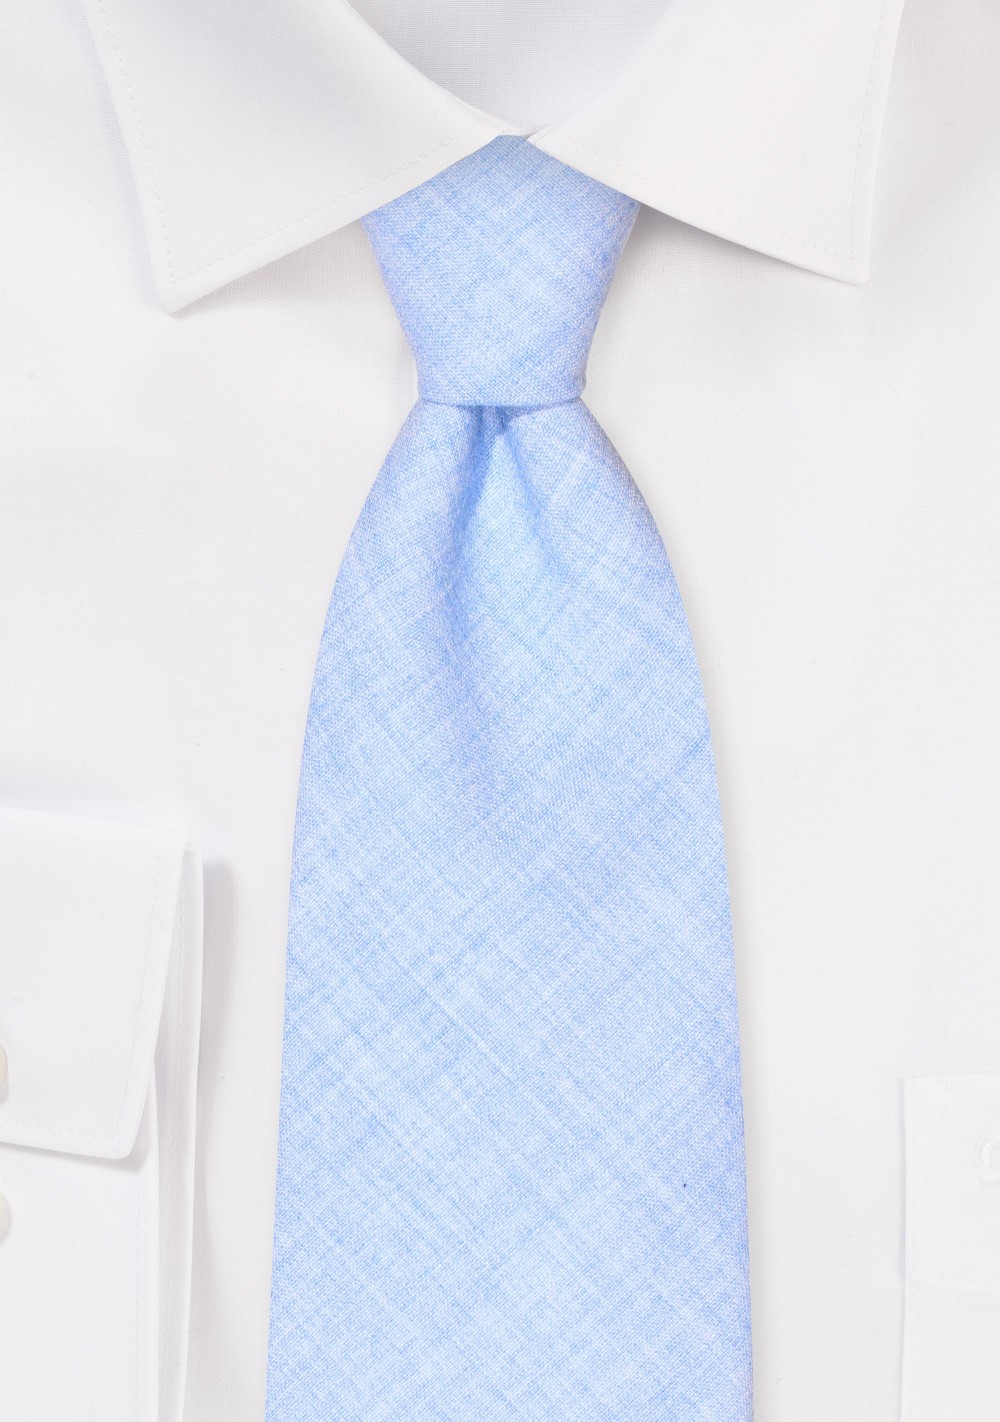 Light Blue Neckties - Baby Blue Ties - Sky Blue Ties - Powder Blue Mens ...